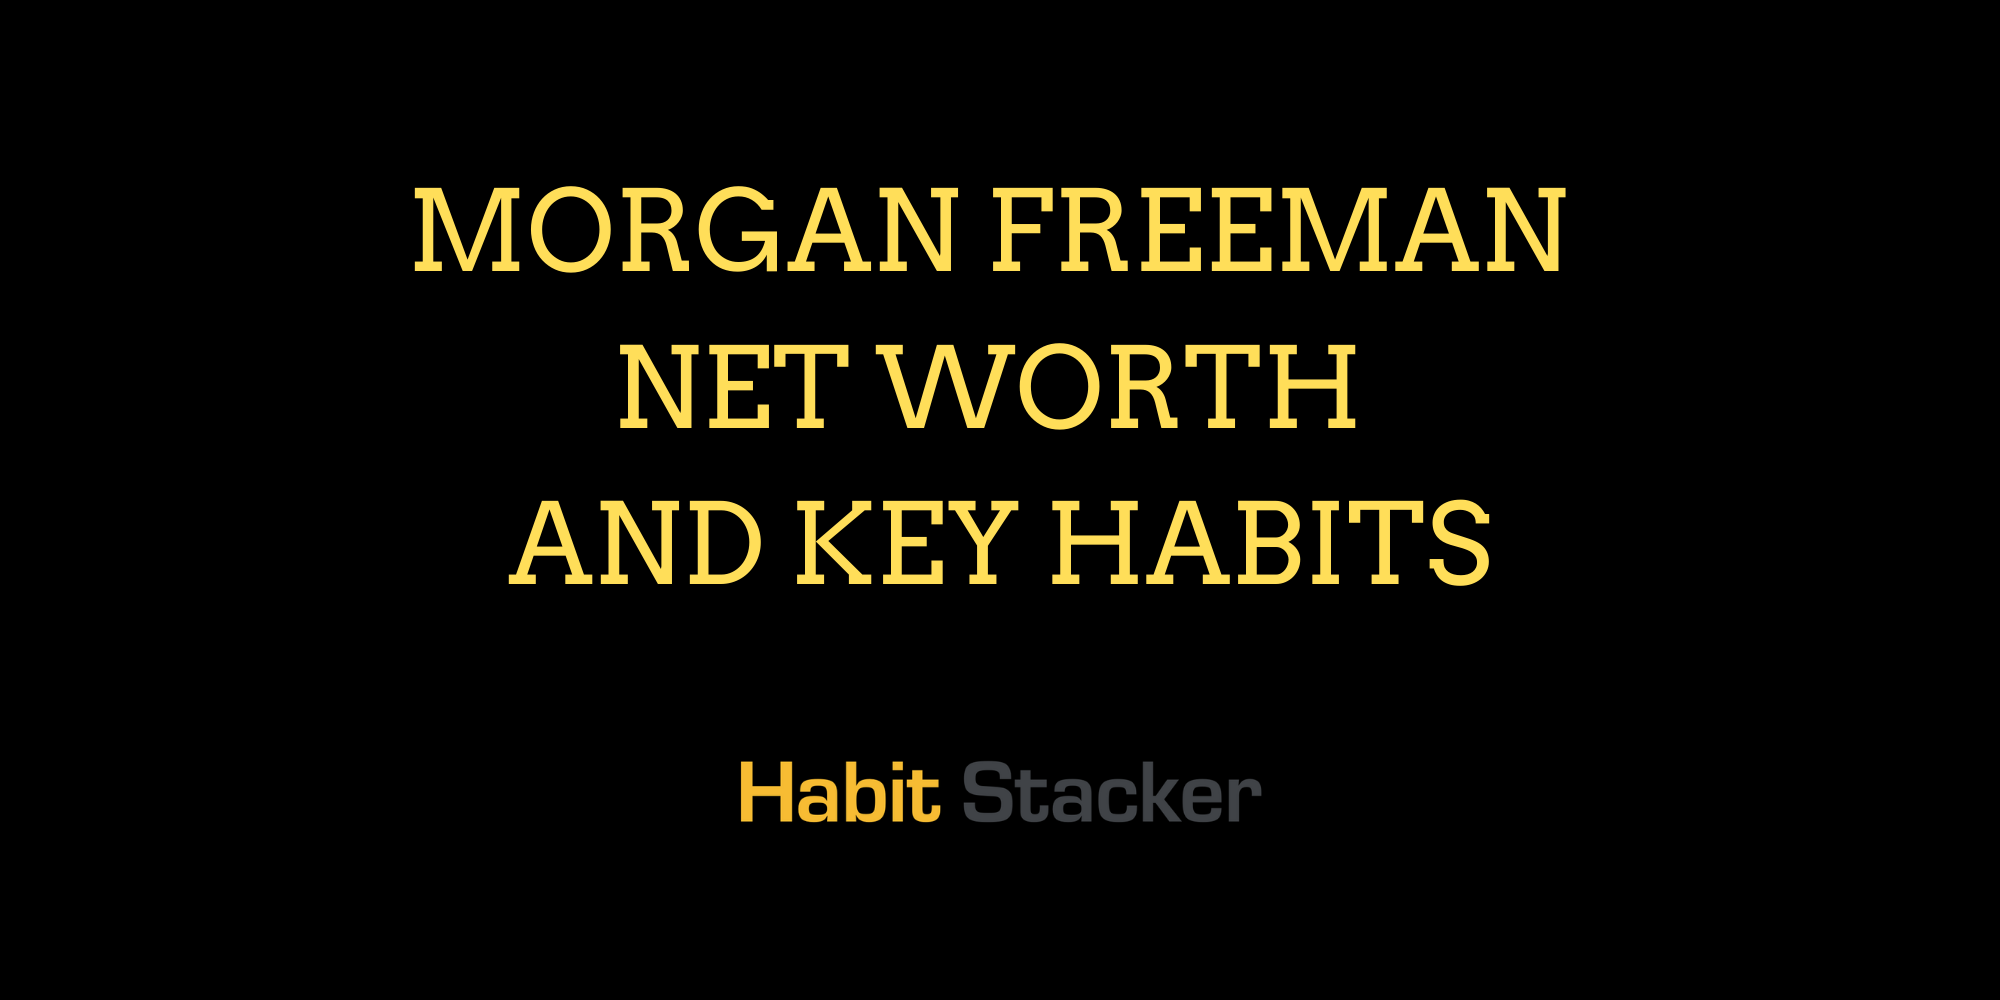 Morgan Freeman Net Worth and Key Habits